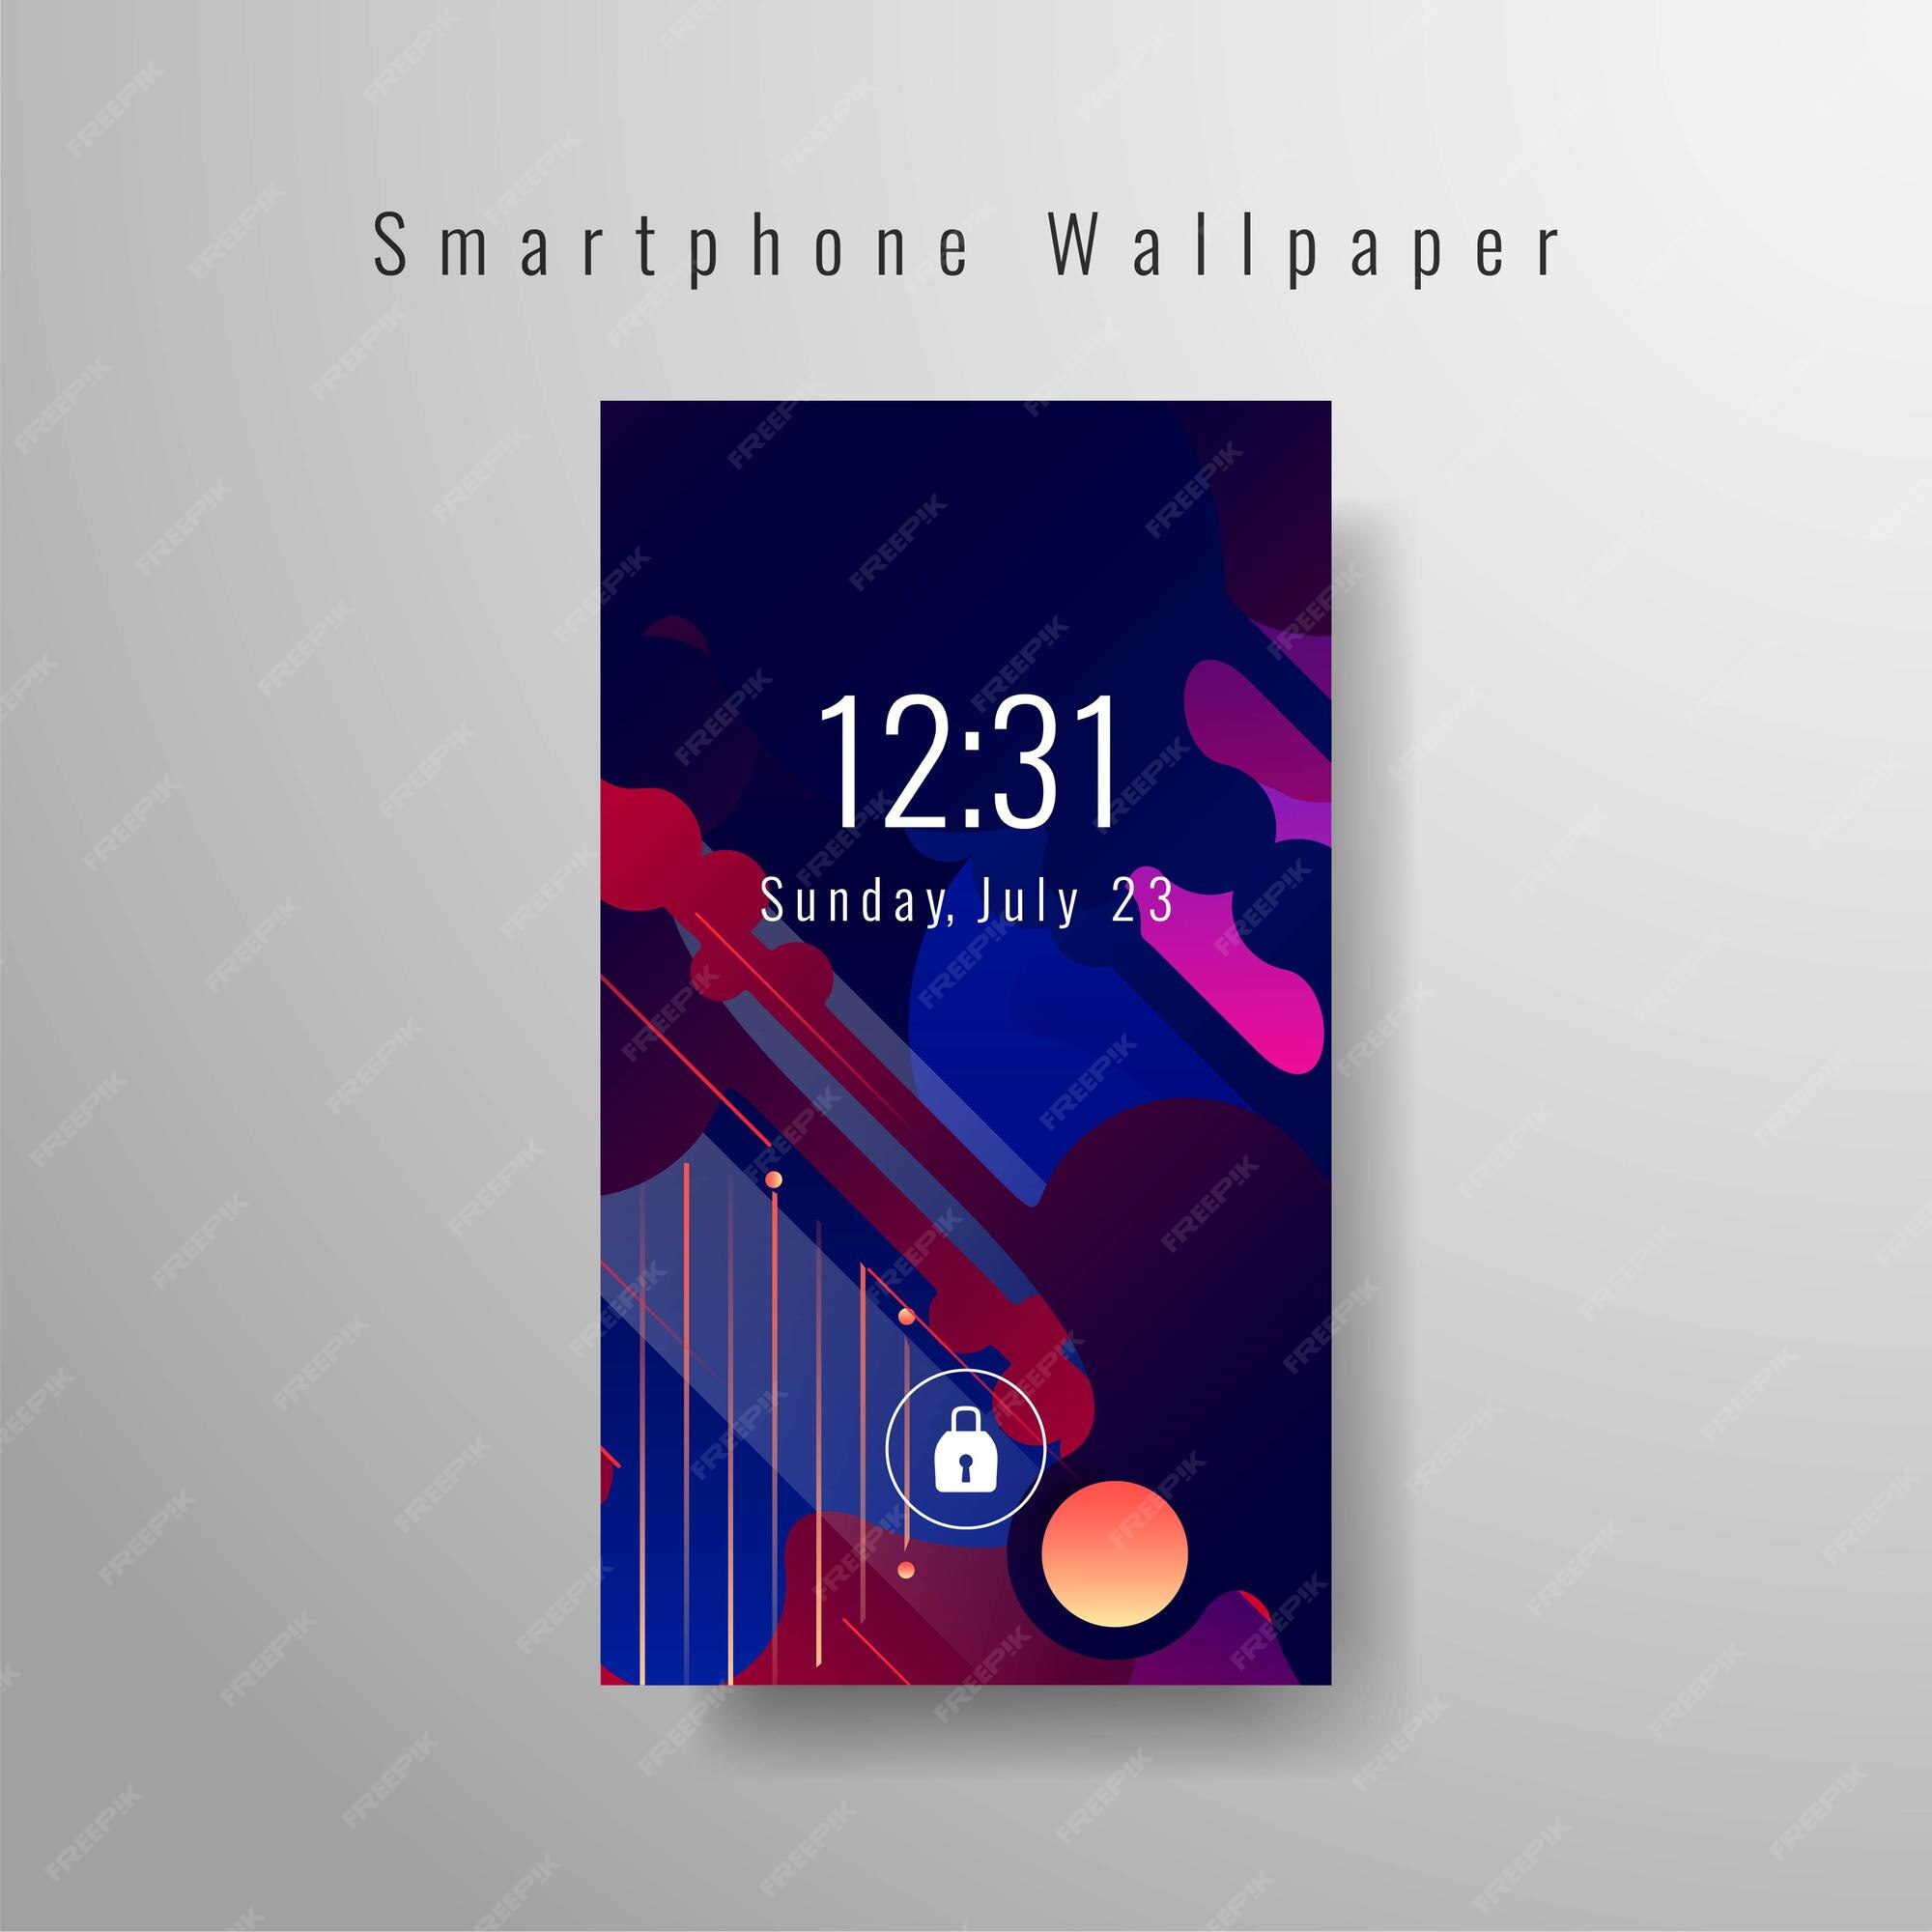 Free Vector | Abstract elegant smartphone wallpaper design